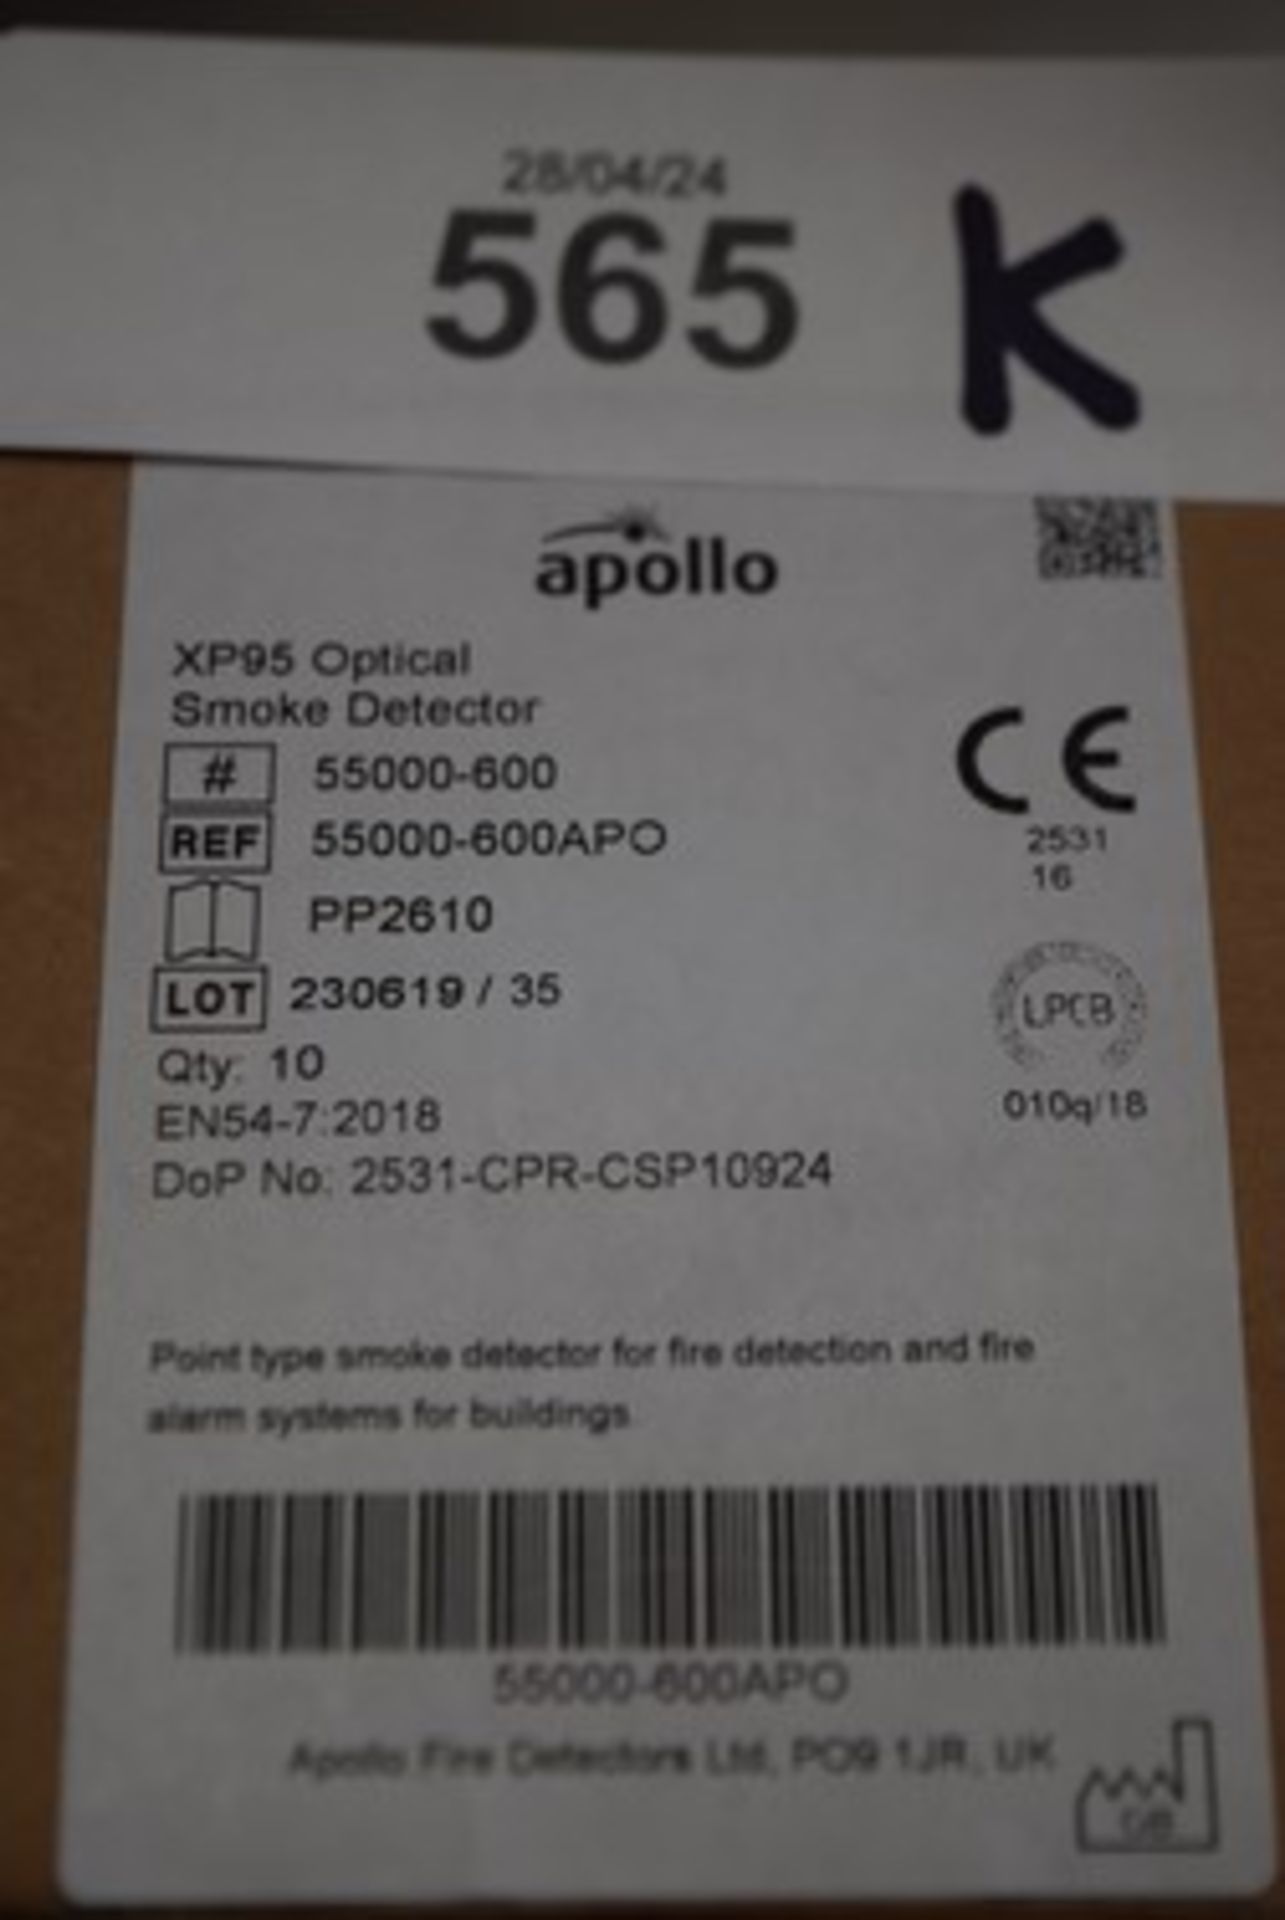 20 x Apollo optical smoke detectors, item No: XP95 - new in box (GS30A) - Image 2 of 2